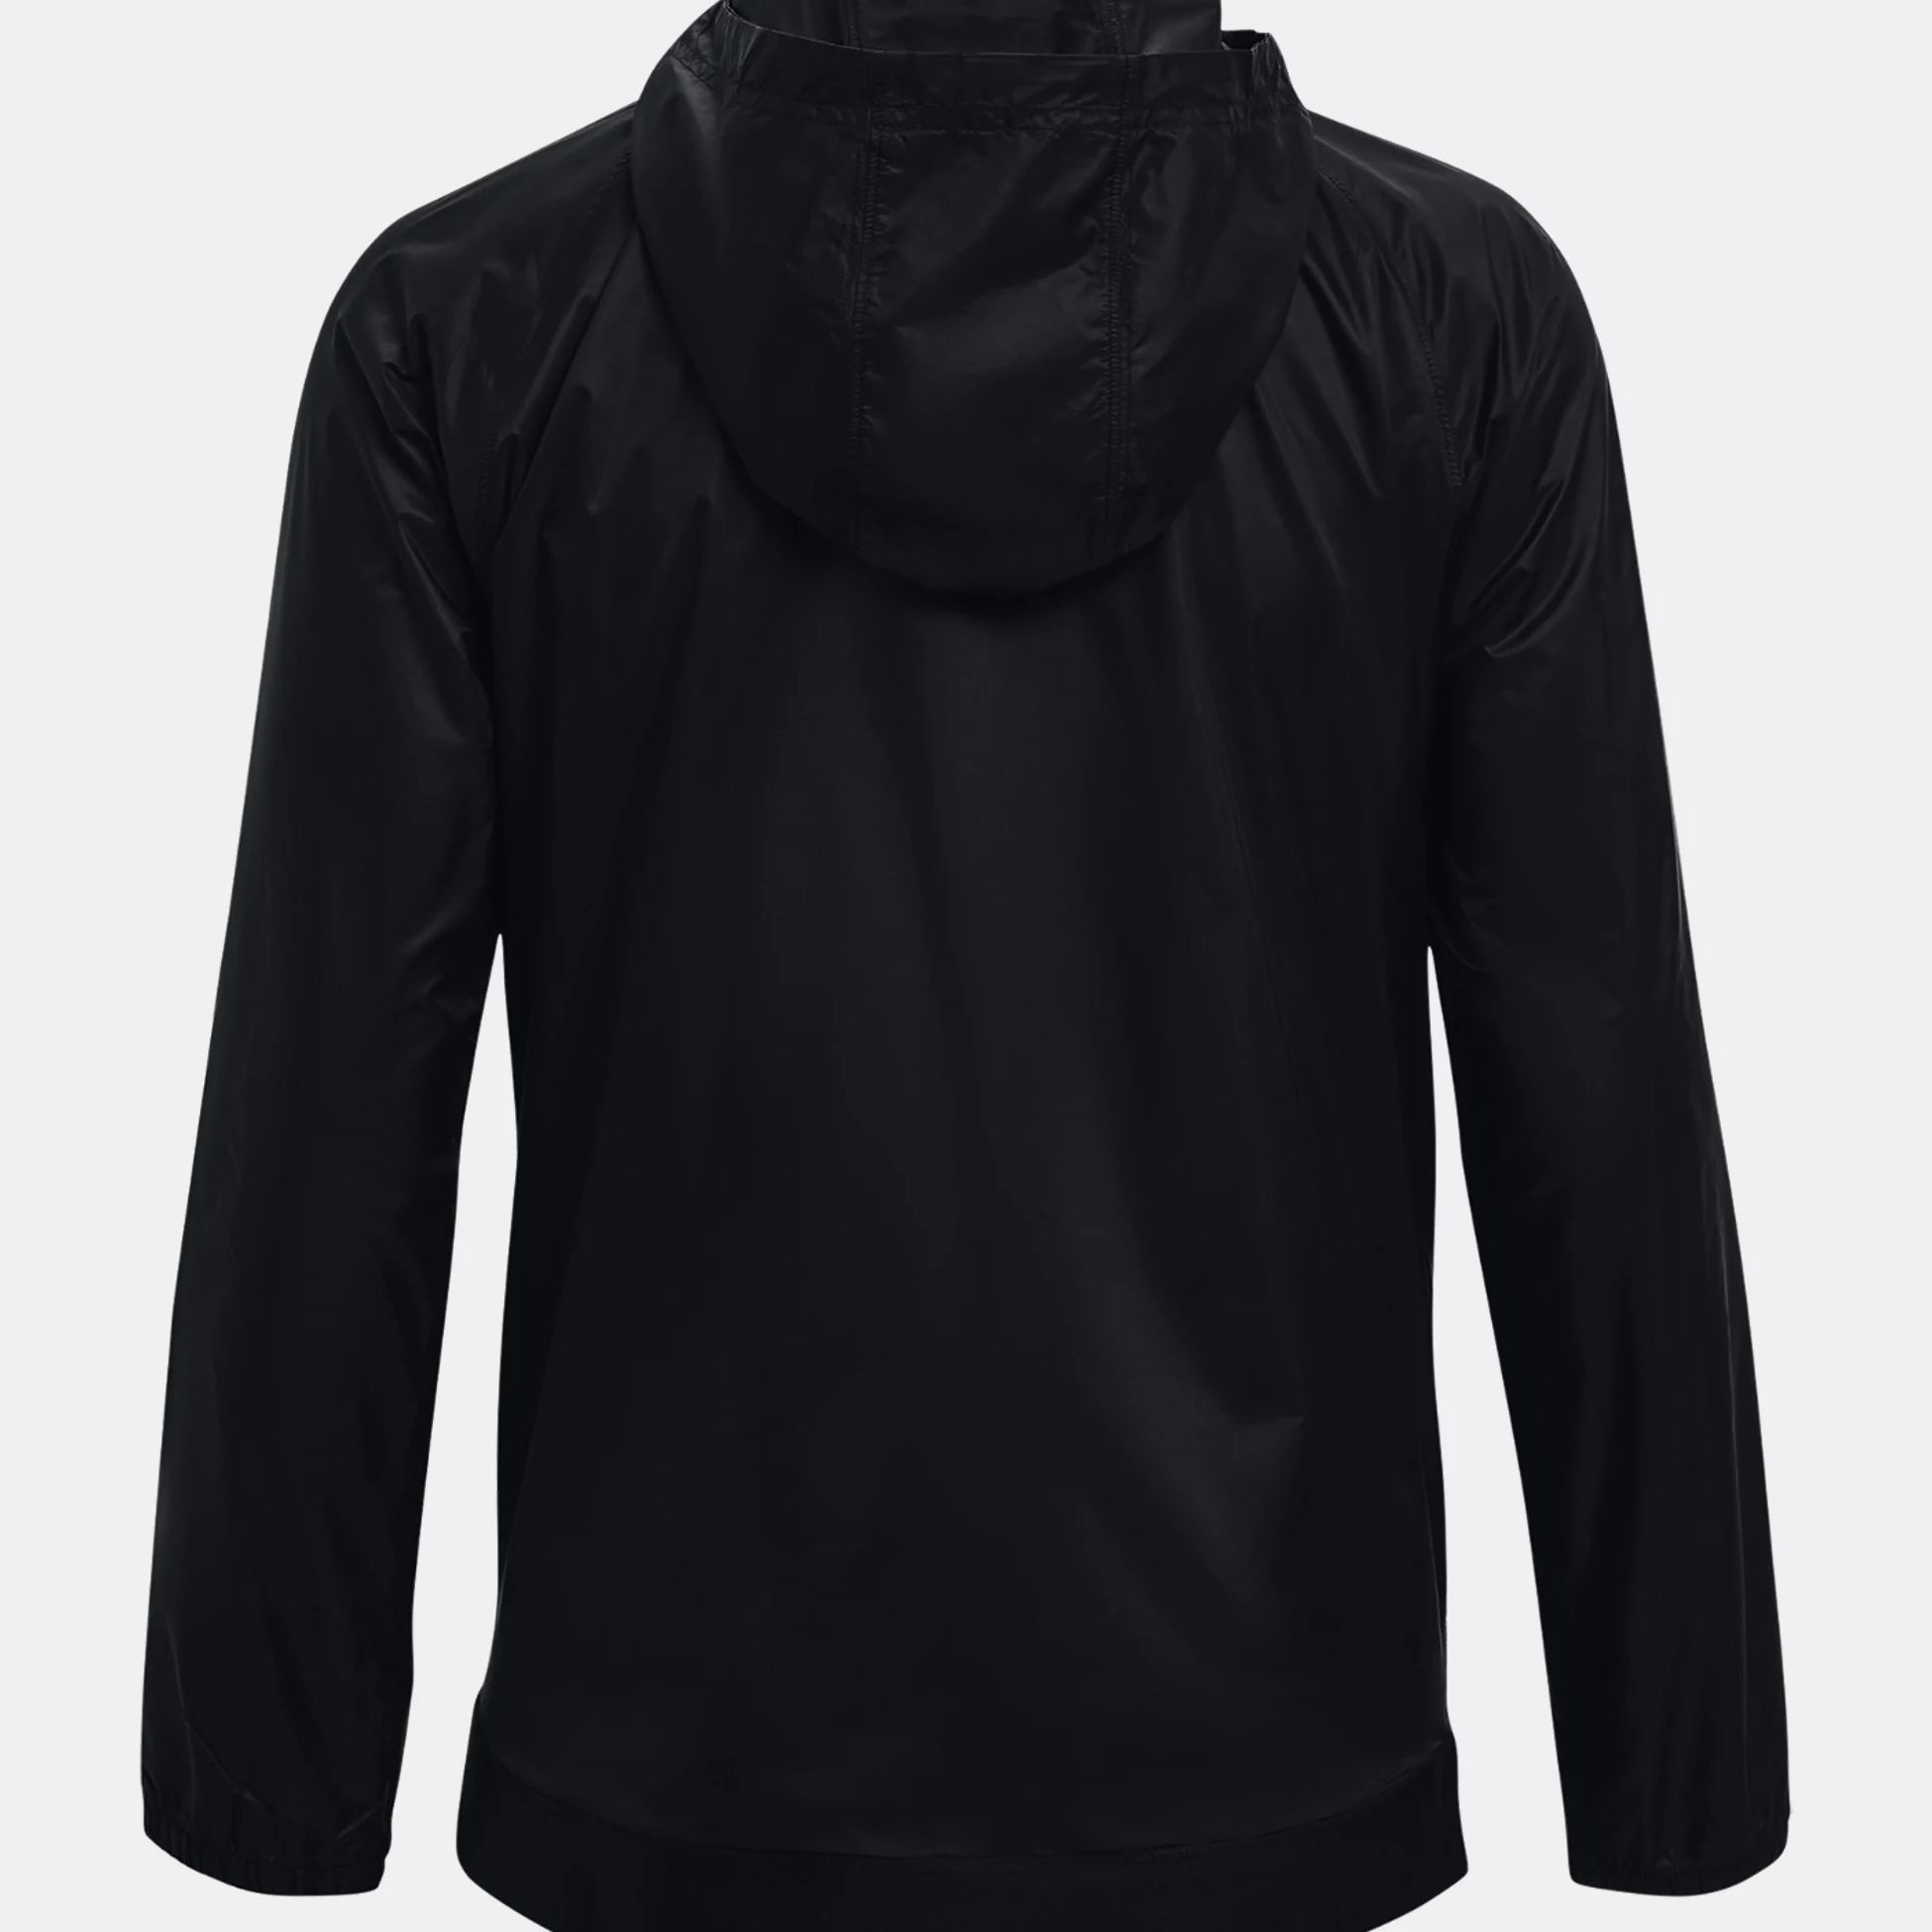 Jackets & Vests -  under armour UA Woven Reversible Full Zip Jacket